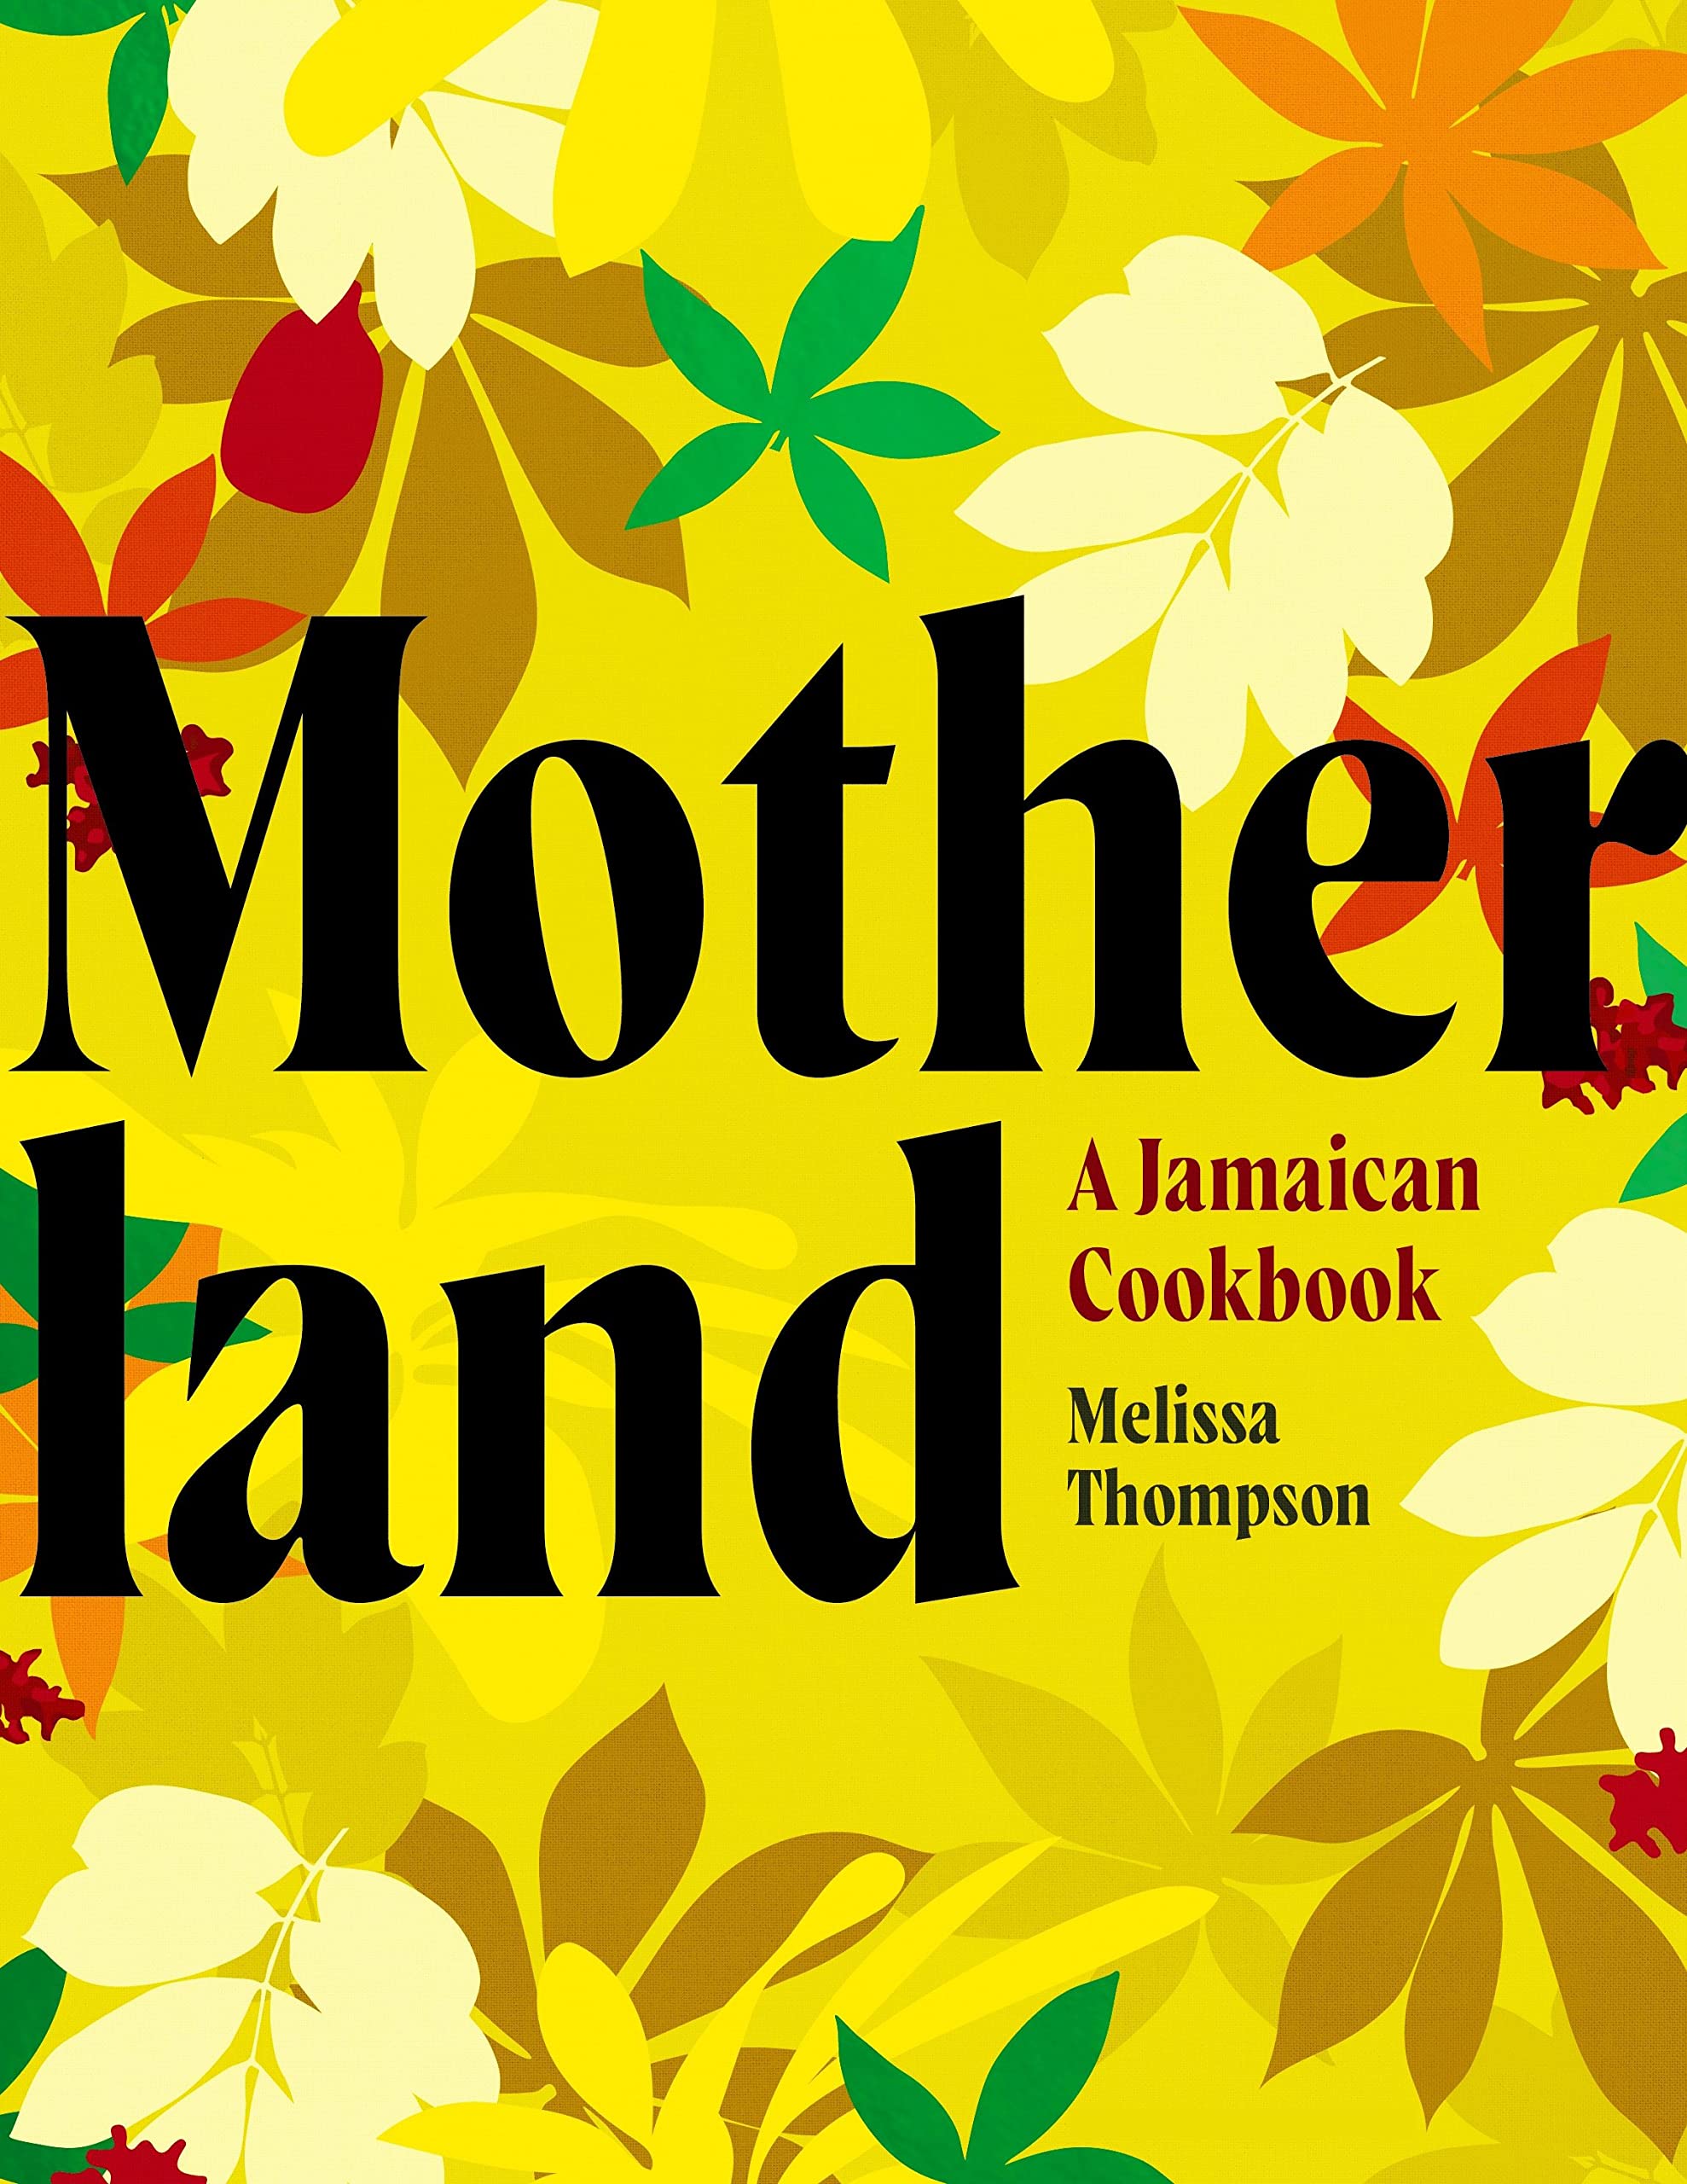 Motherland: A Jamaican Cookbook (Melissa Thompson, Patricia Niven)